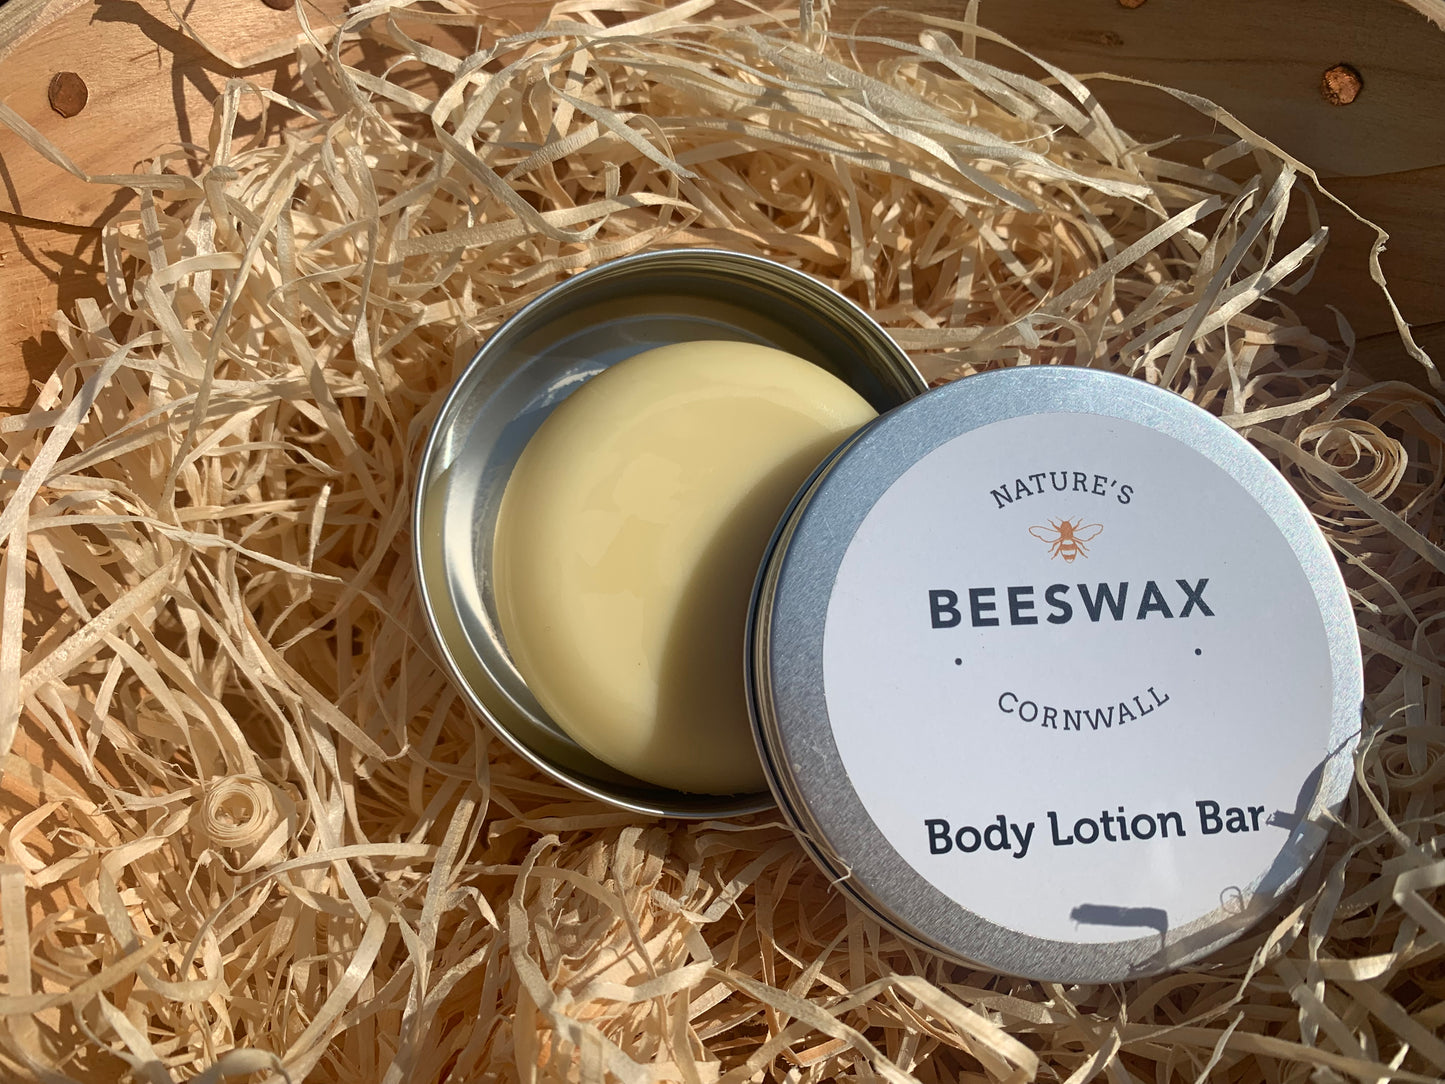 Body Lotion Bar (Beeswax)